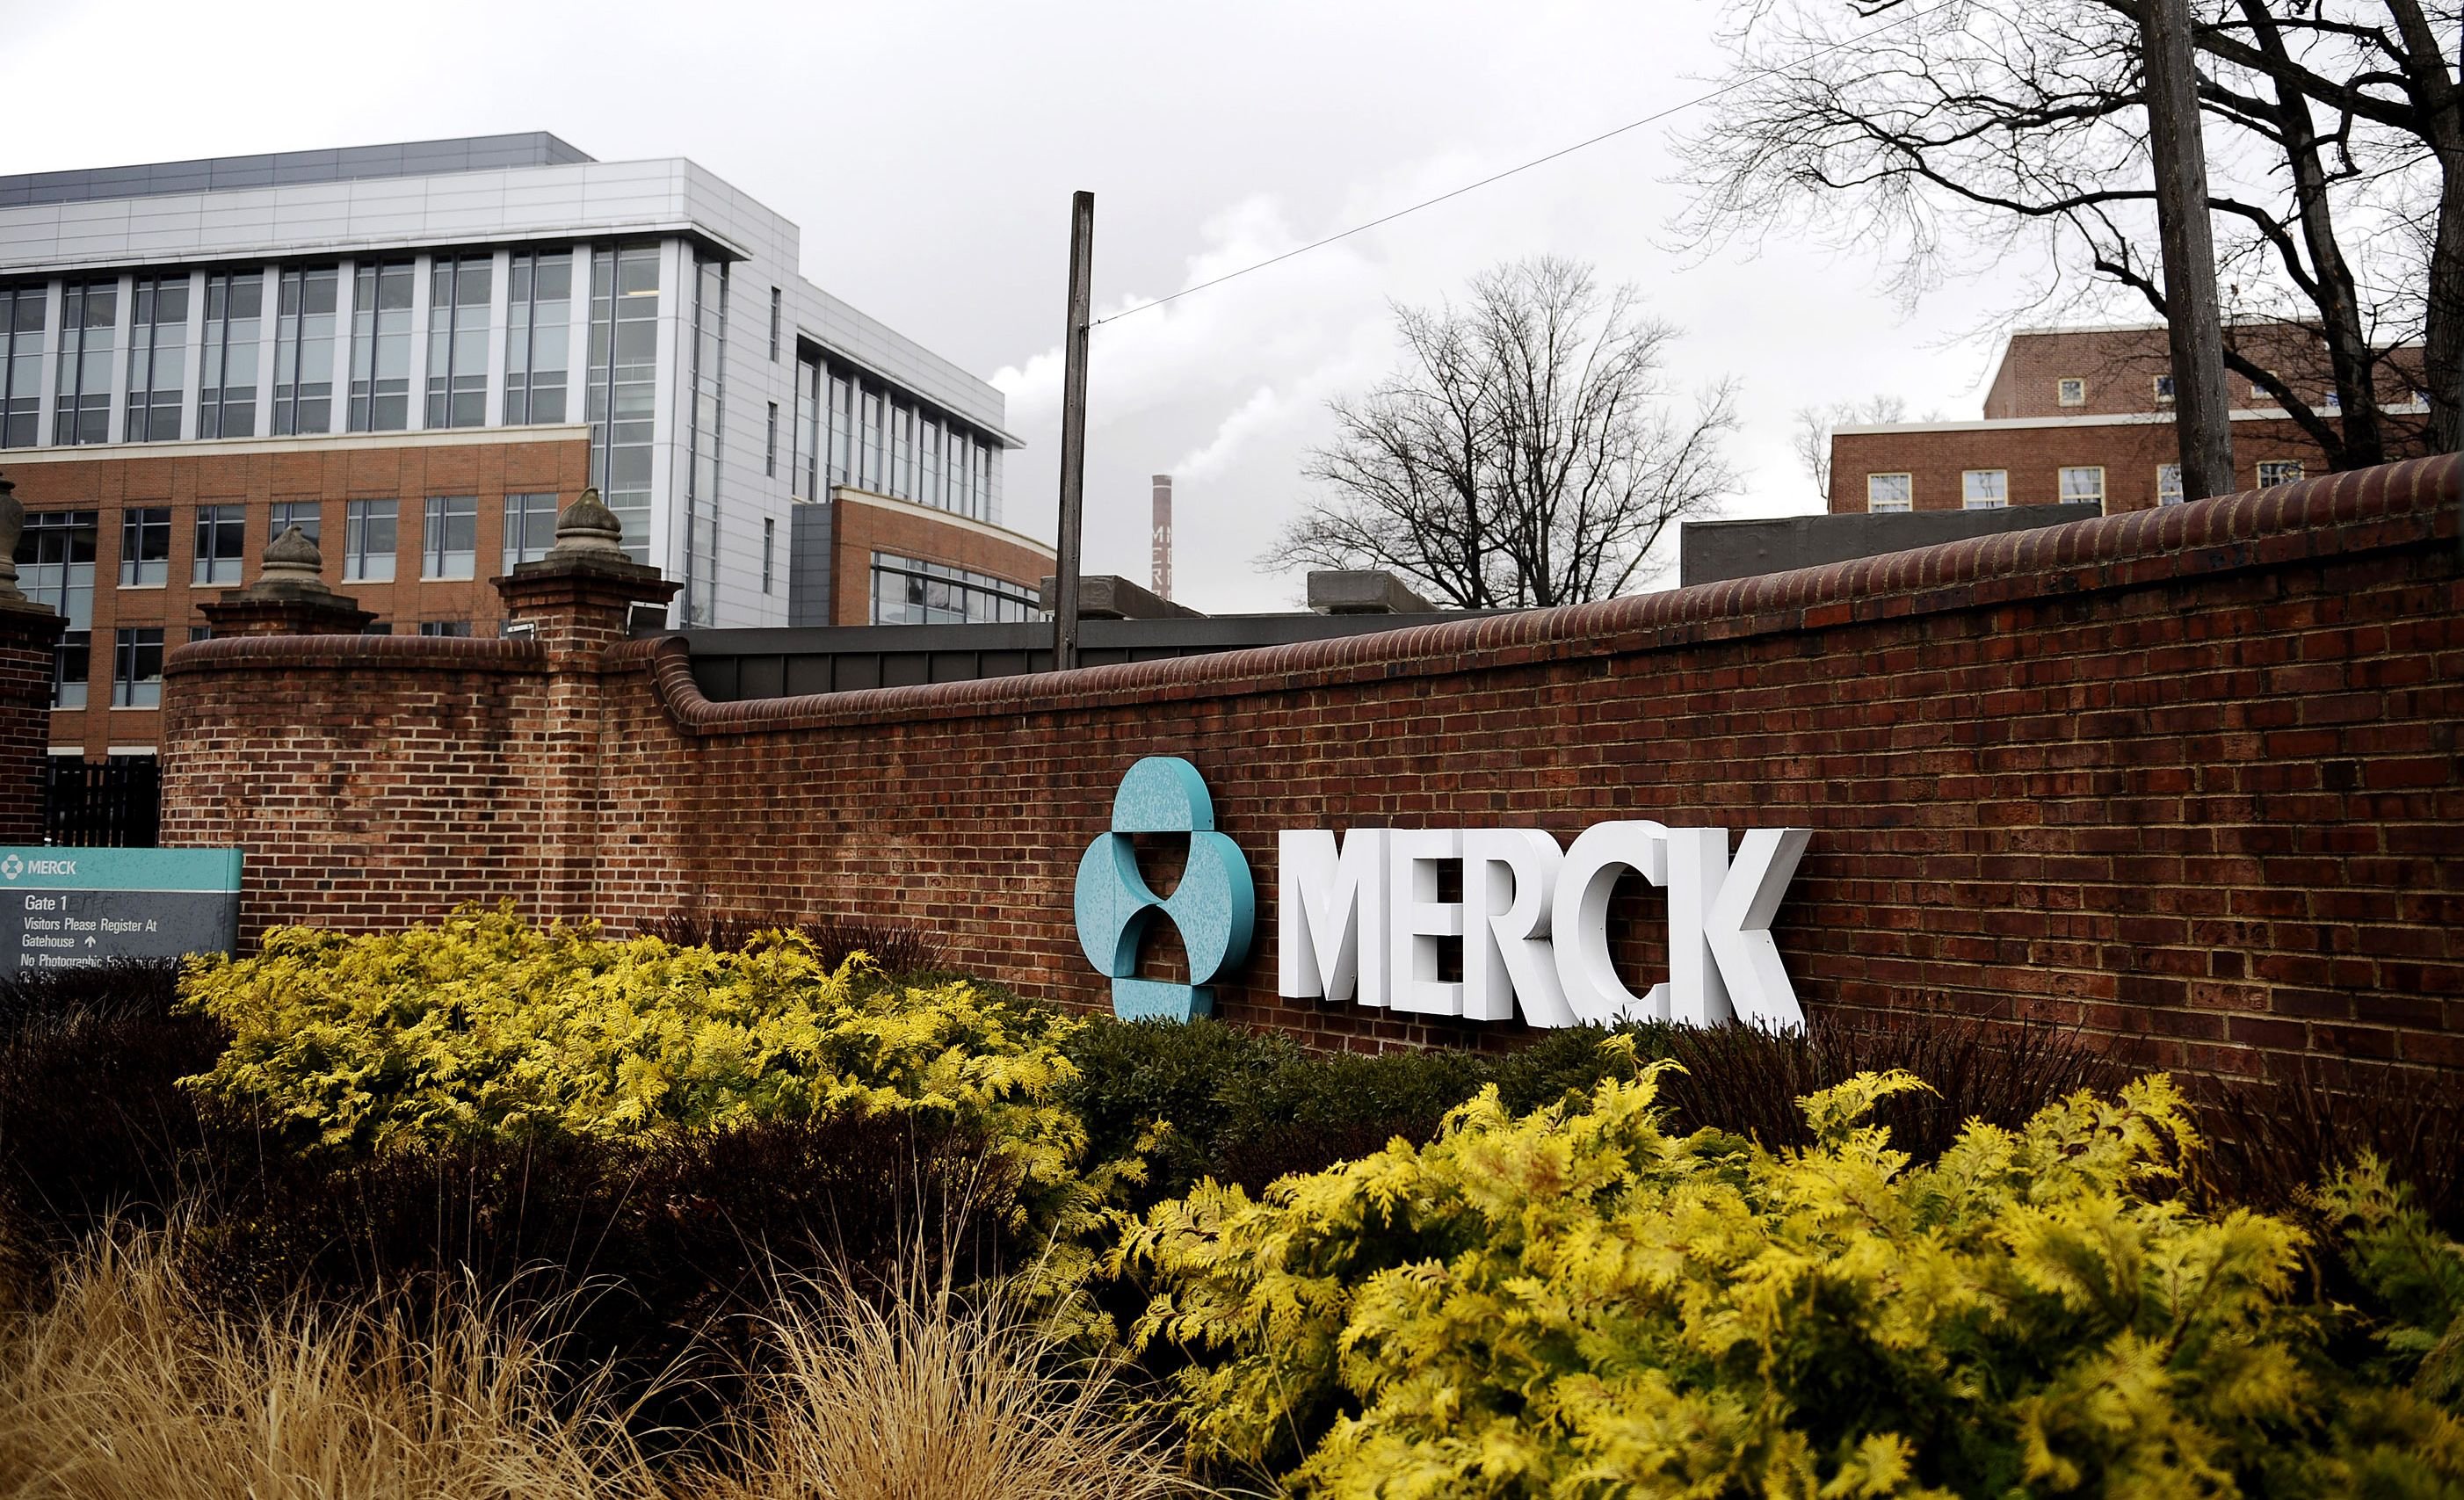 Merck falls short in Q4 sales but sees EPS growth ahead | Fierce Pharma